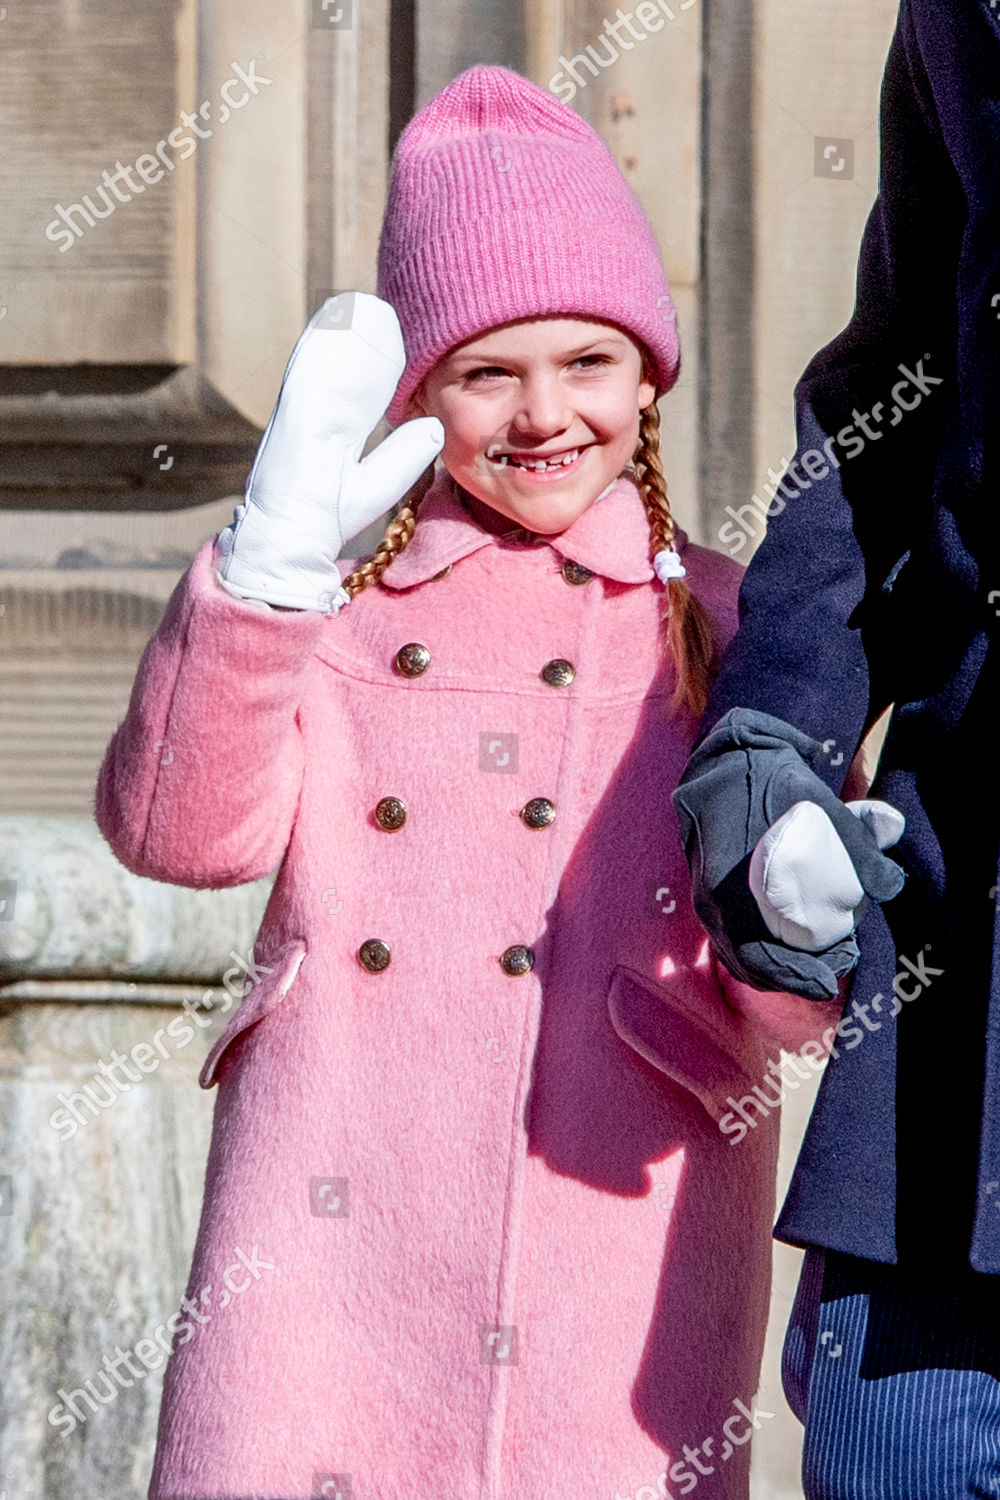 crown-princess-victoria-name-day-celebrations-stockholm-sweden-shutterstock-editorial-10151872ad.jpg